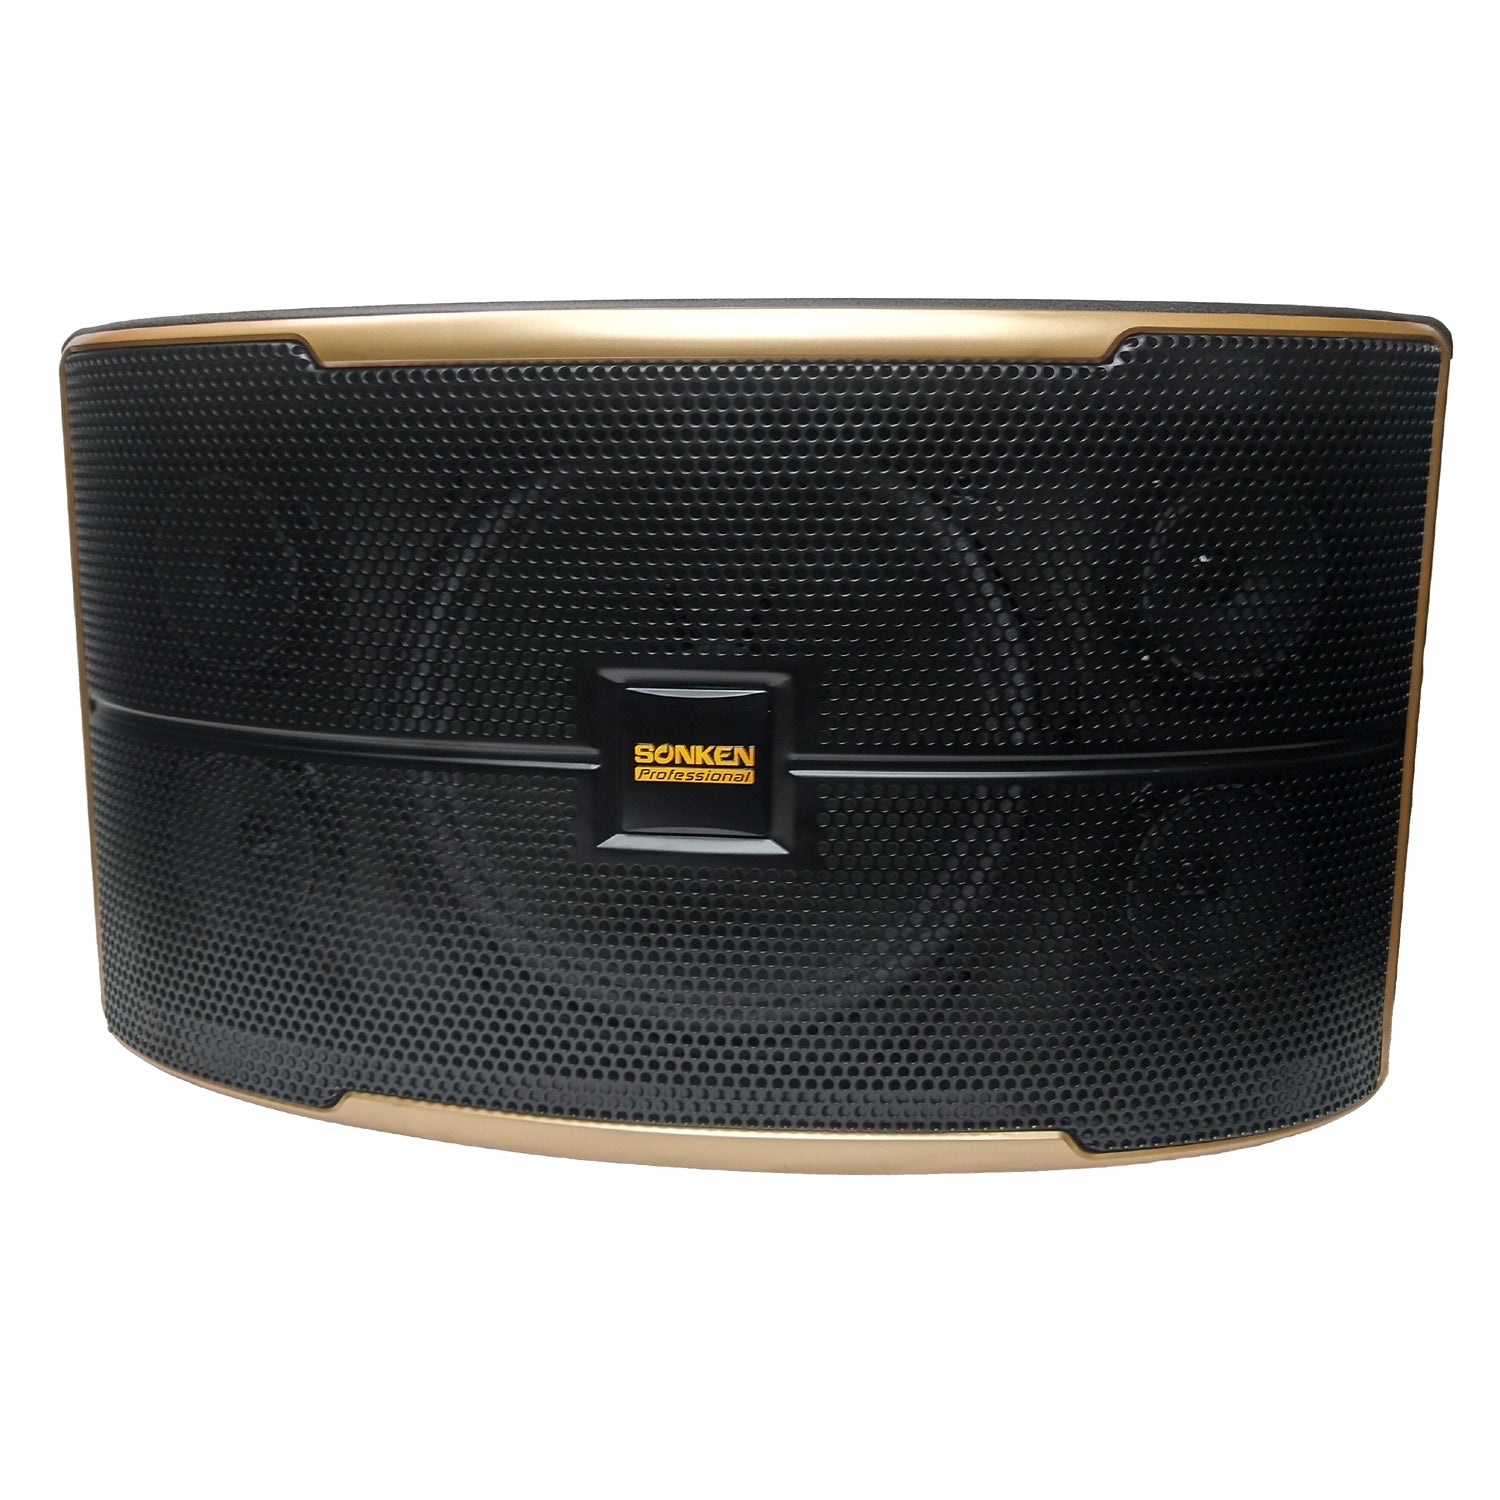 Sonken Home Karaoke Studio Package Deal (SA-767 Amp + CS-600 Speakers + WM-4000D Wireless Mics) - Karaoke Home Entertainment